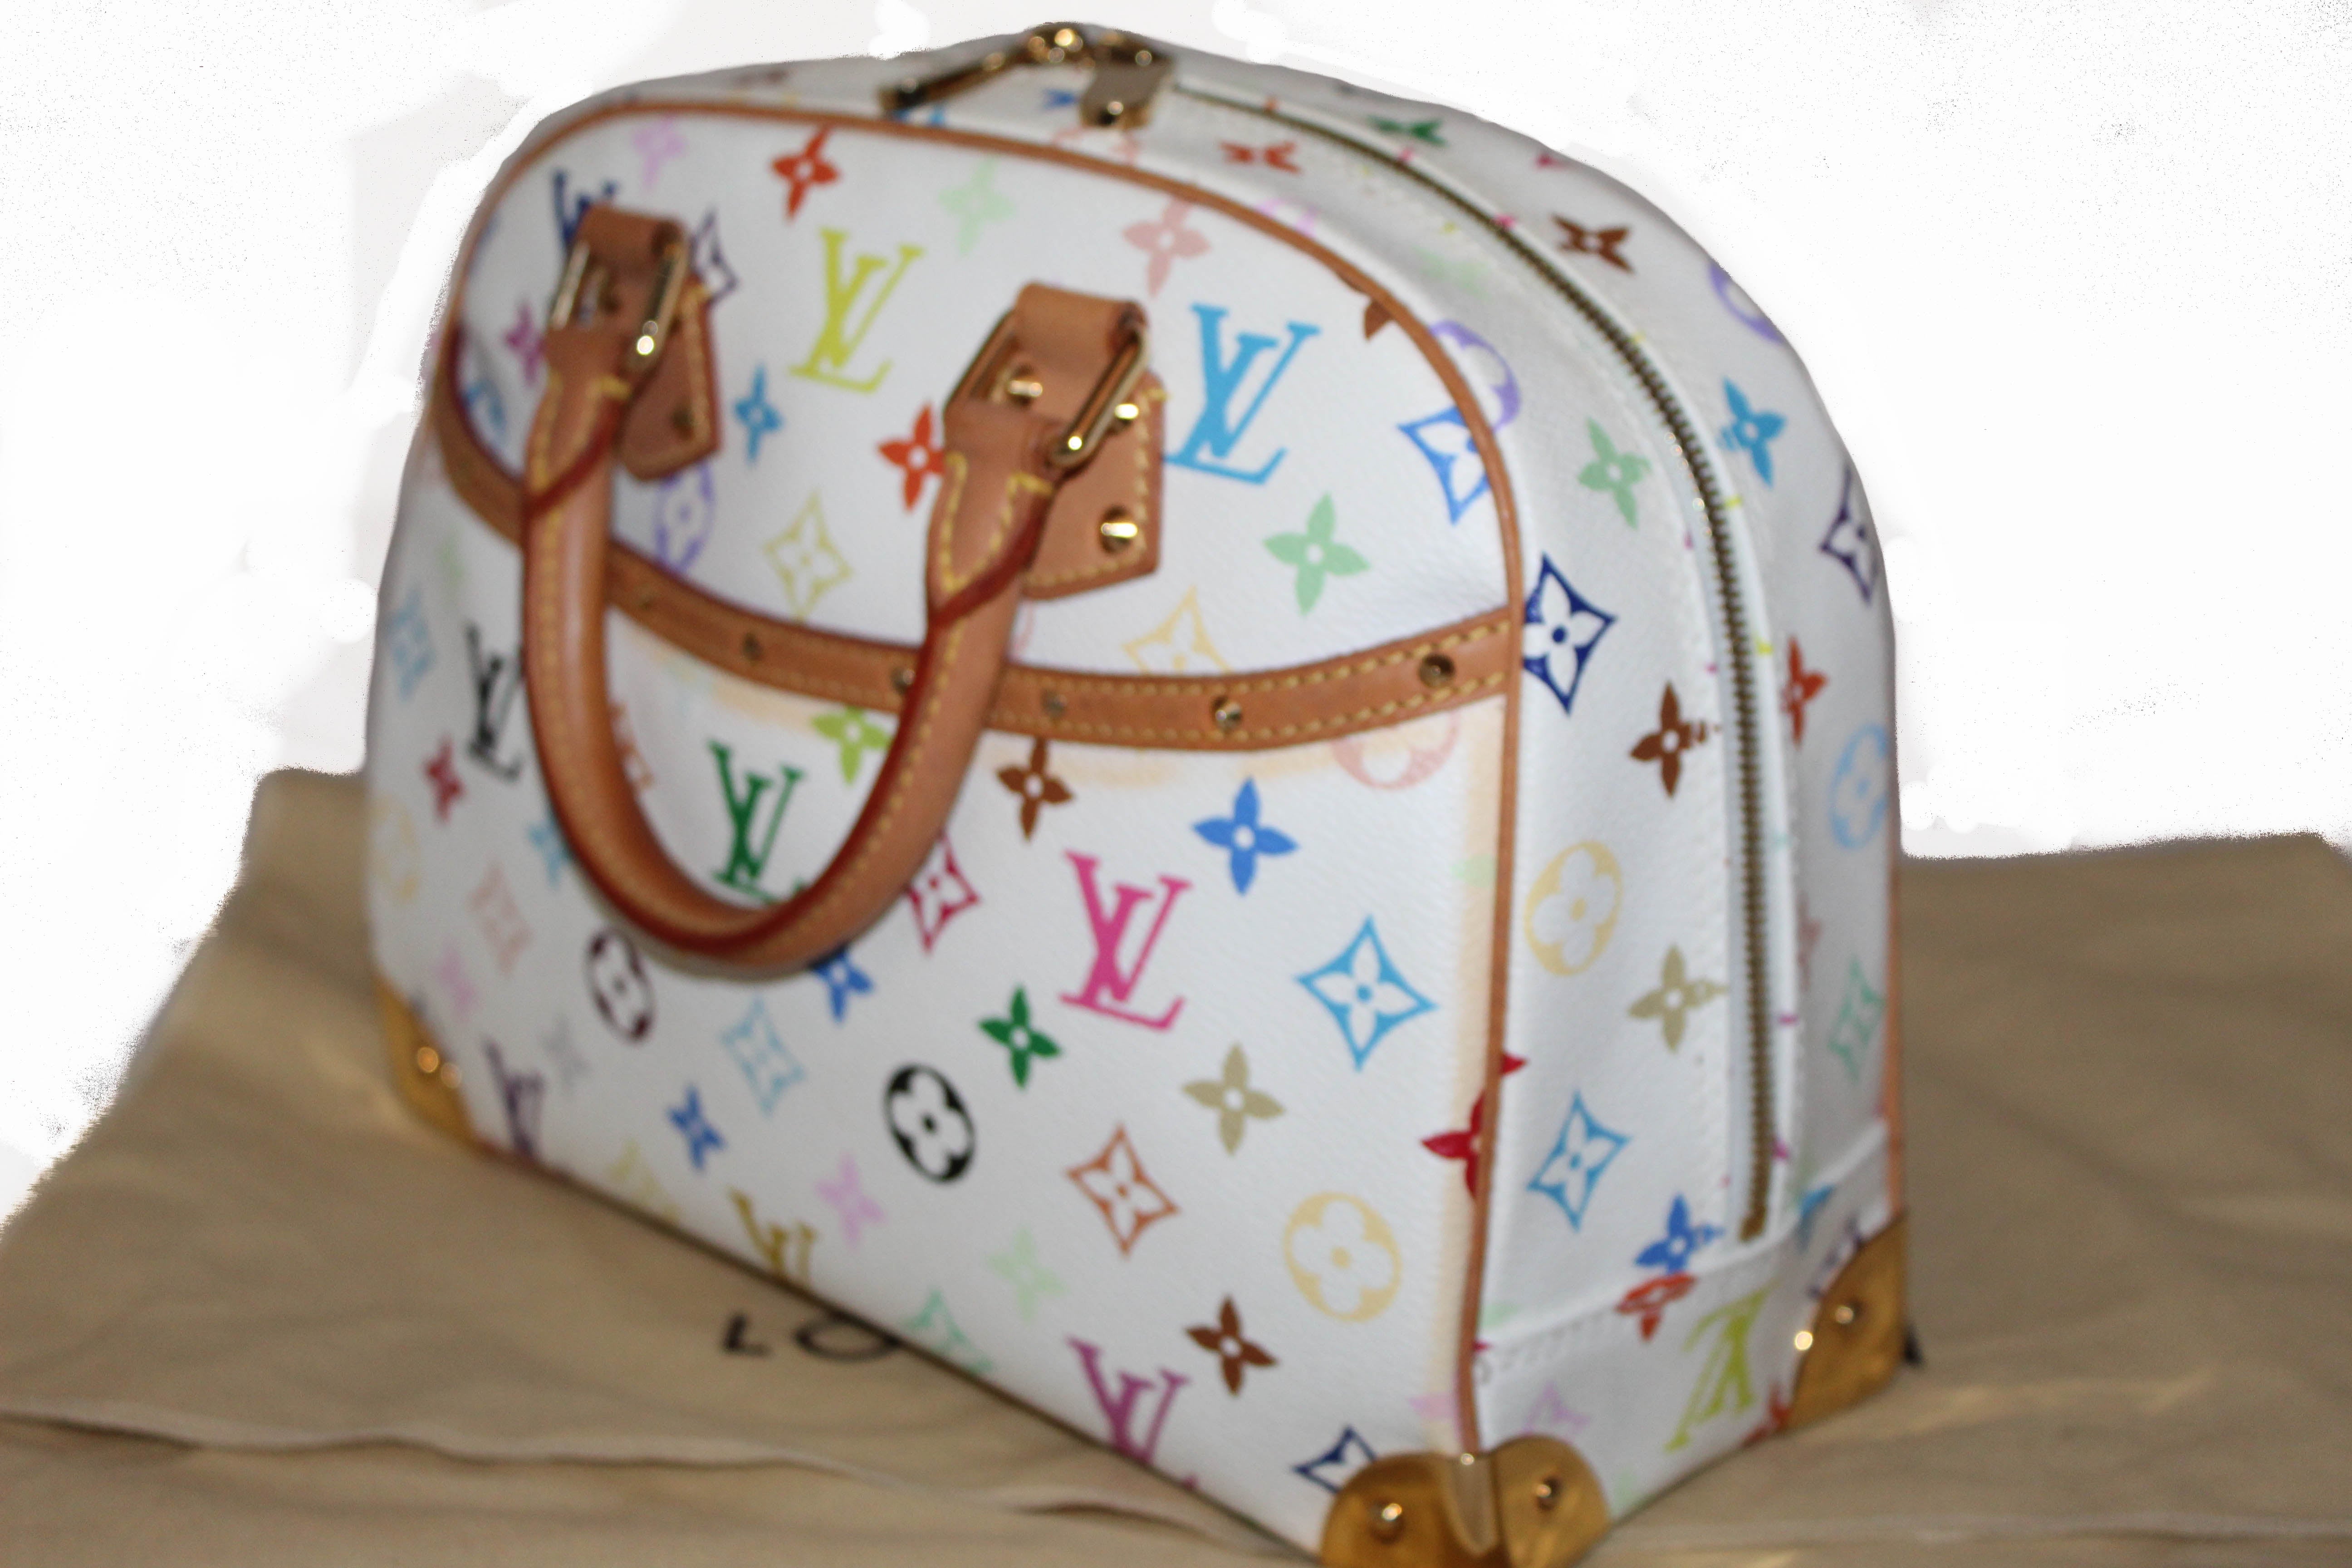 multicolor trouville handbag